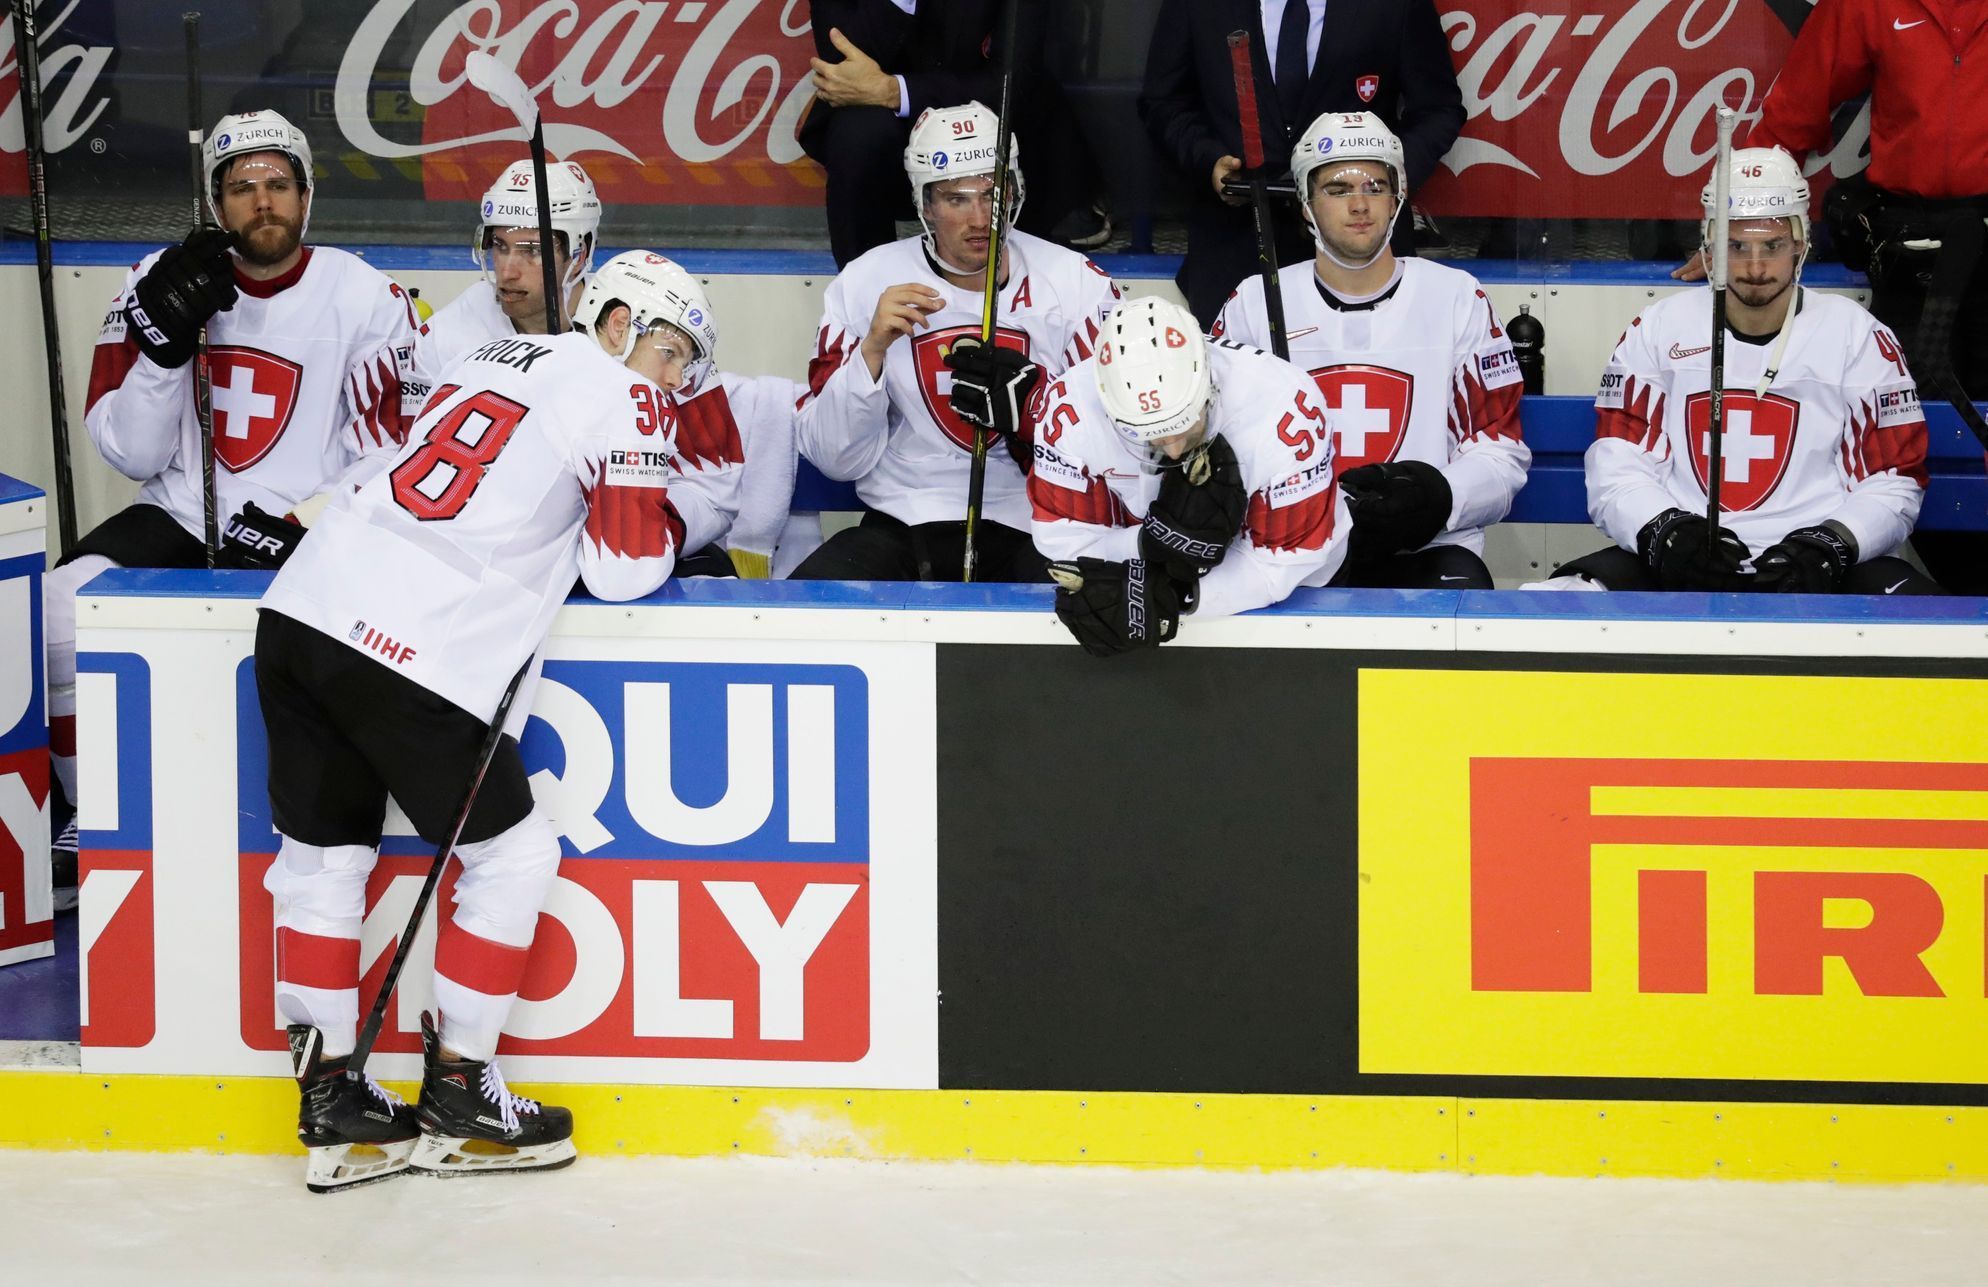 Zklamaní Švýcaři po čtvrtfinále MS 2019 Kanada - Švýcarsko